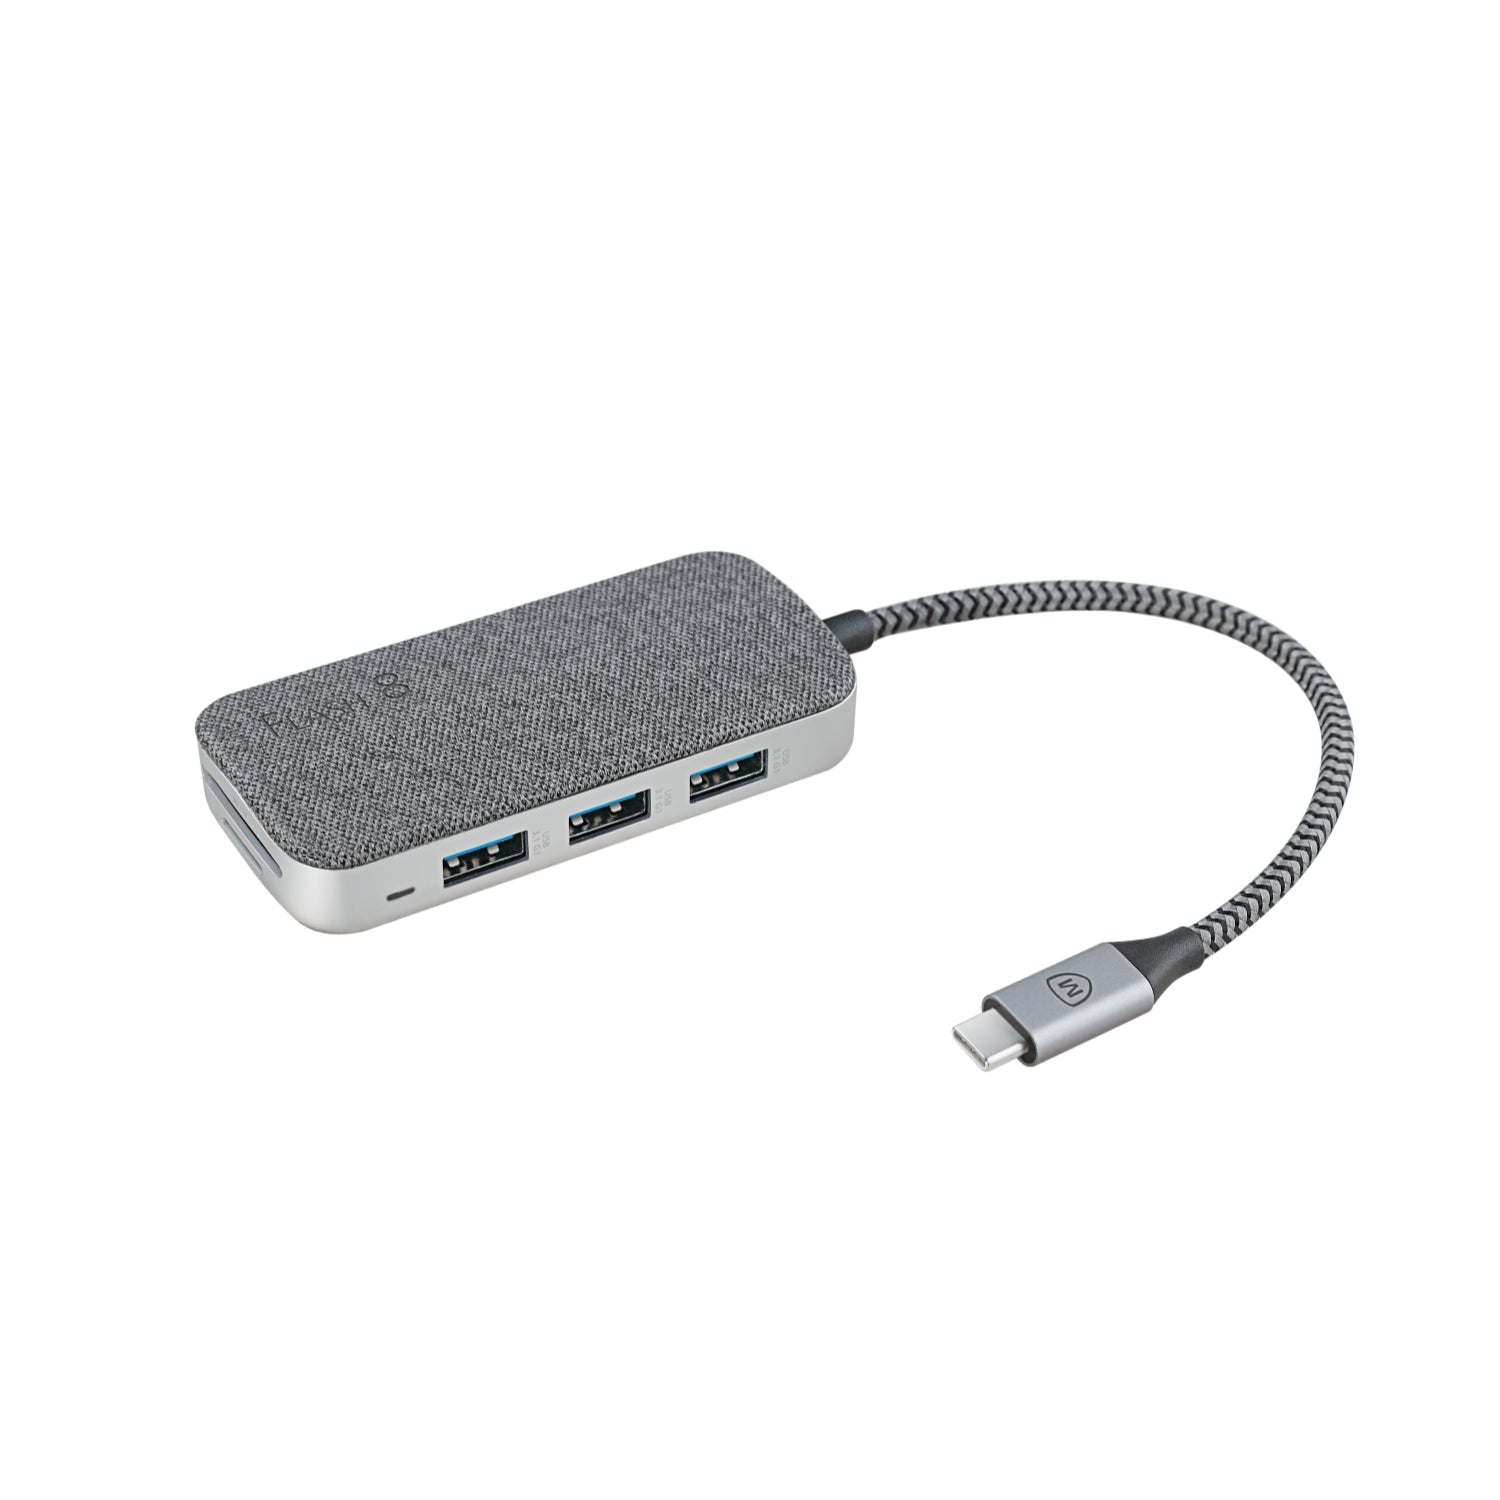 Wholesale USB Multiport USB-C to 8-Ports USB-C Digital AV Multiport Adapter MICROPACK MDC-8